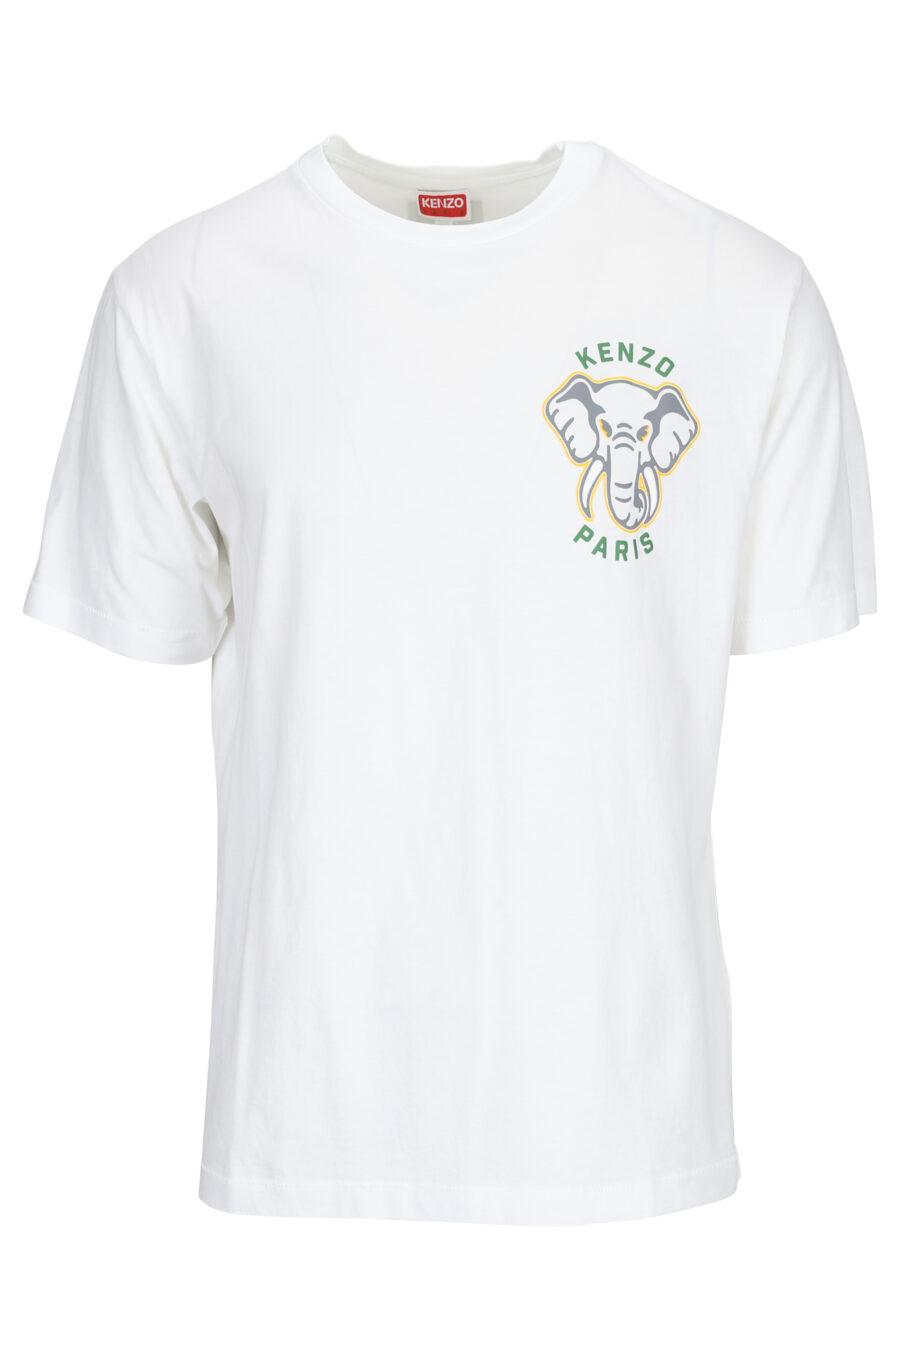 T-shirt blanc avec minilogue éléphant - 3612230553590